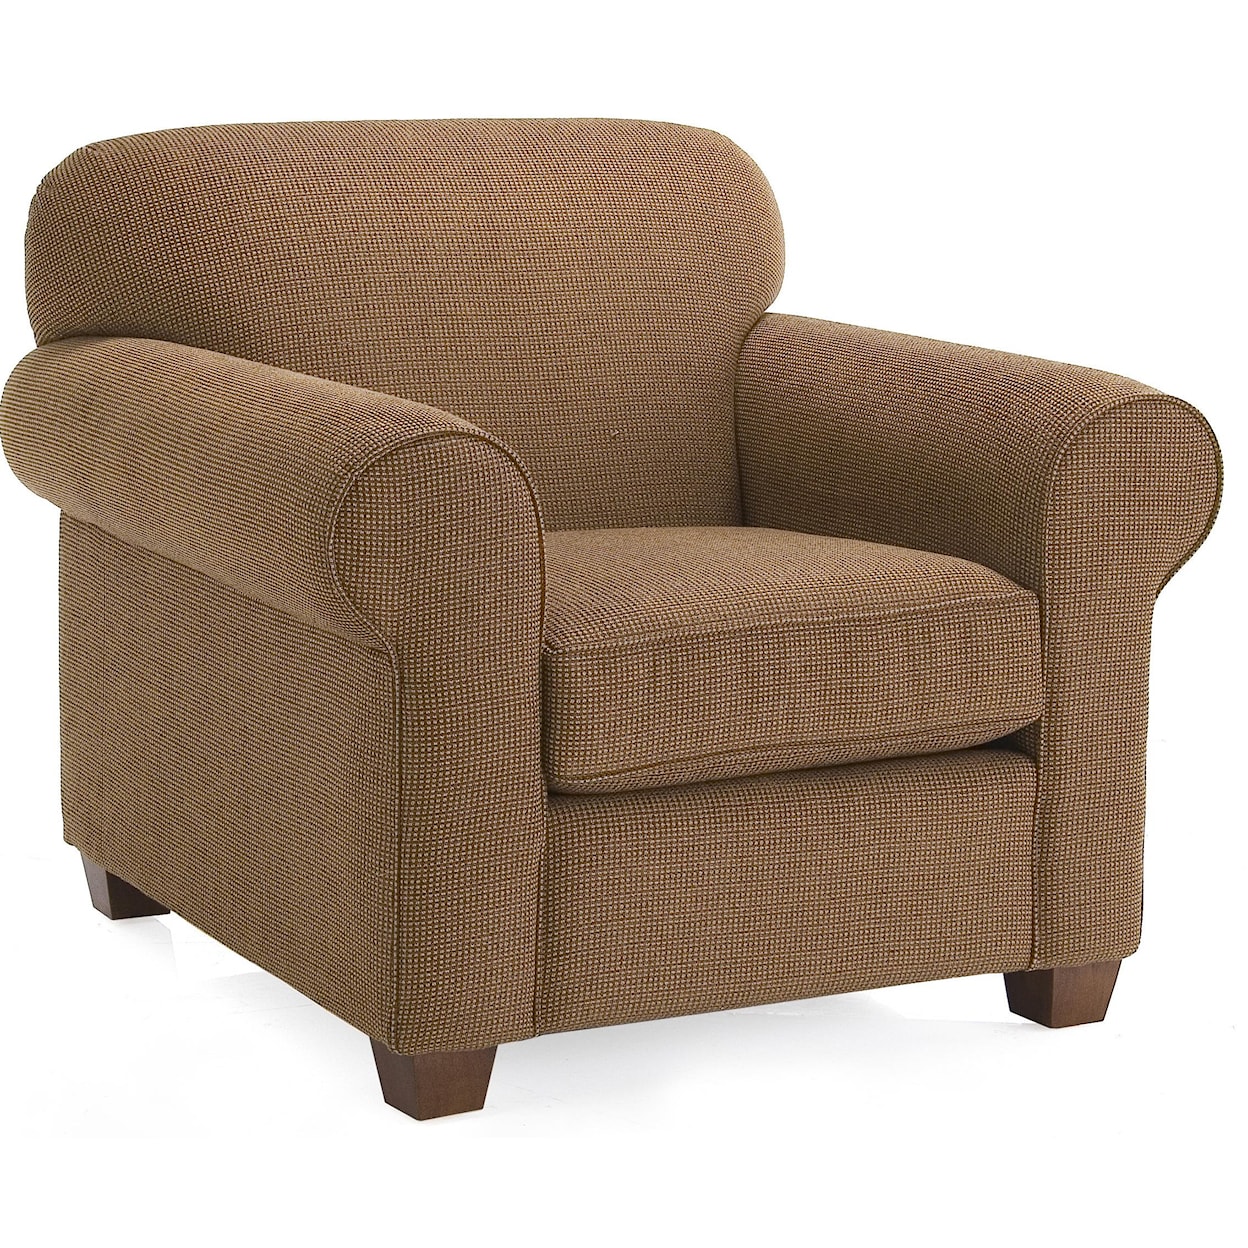 Decor-Rest 2455 Upholstered Chair